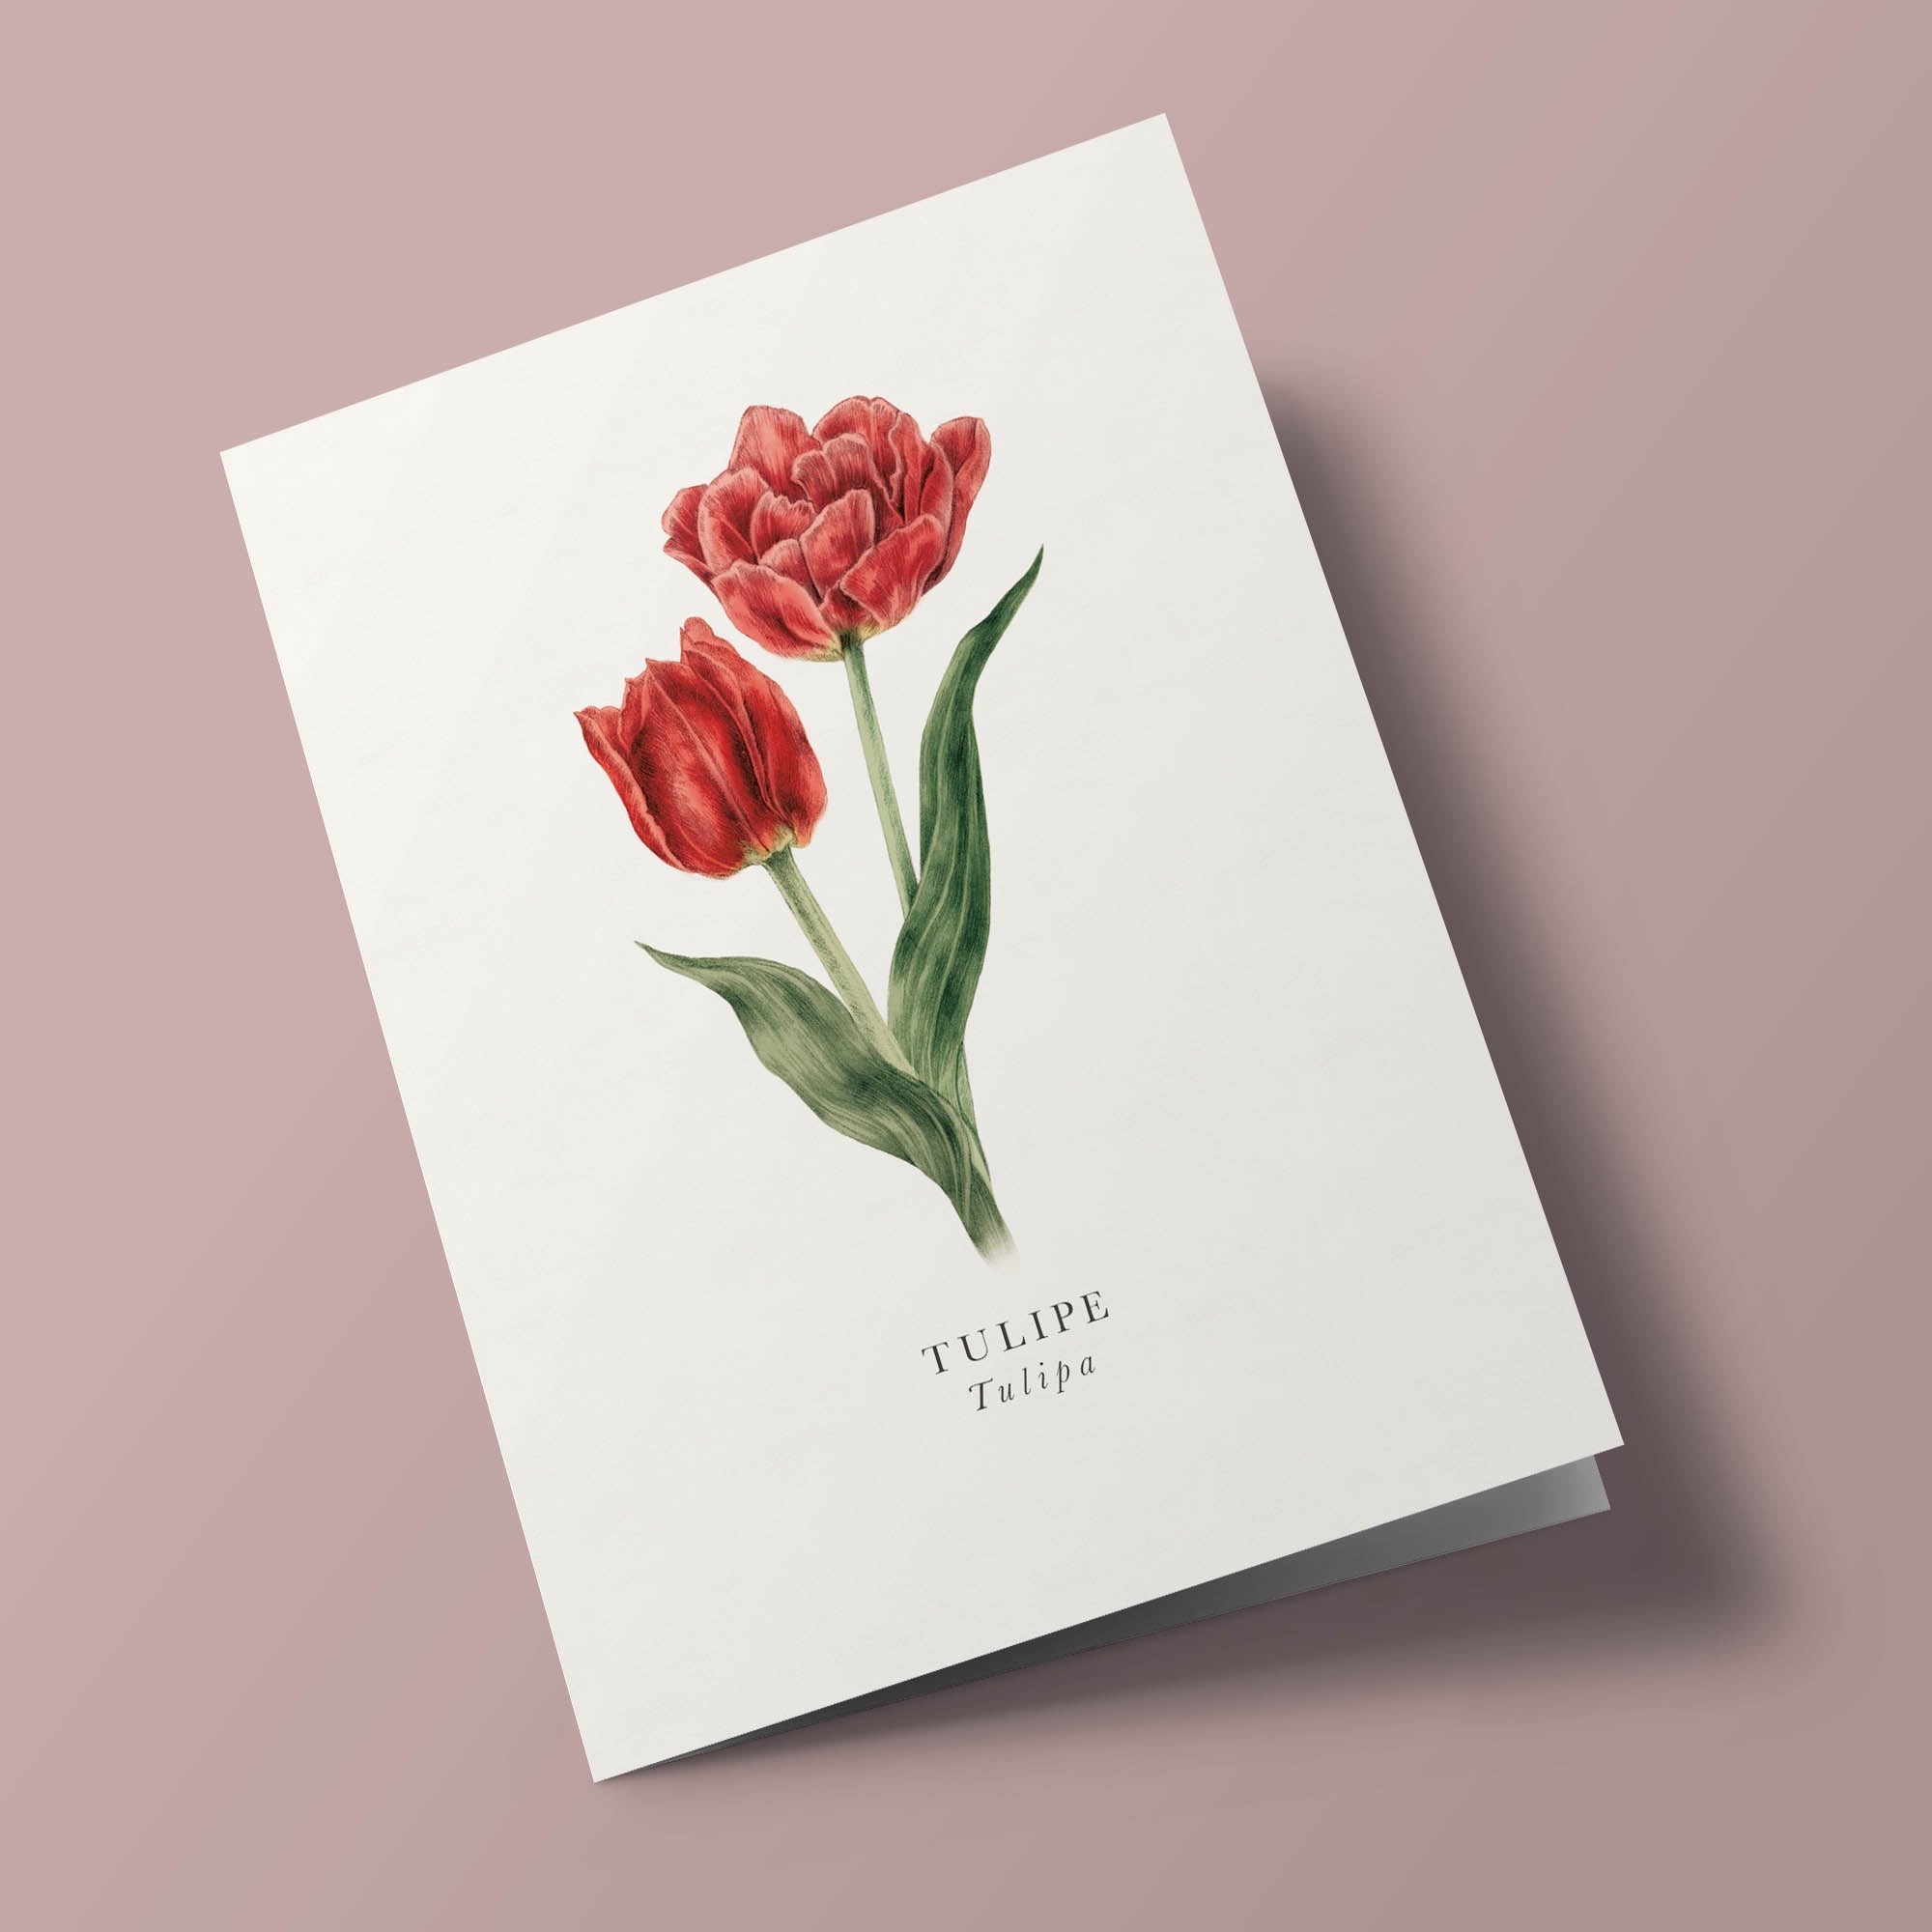 Book and botanics - Tulipe